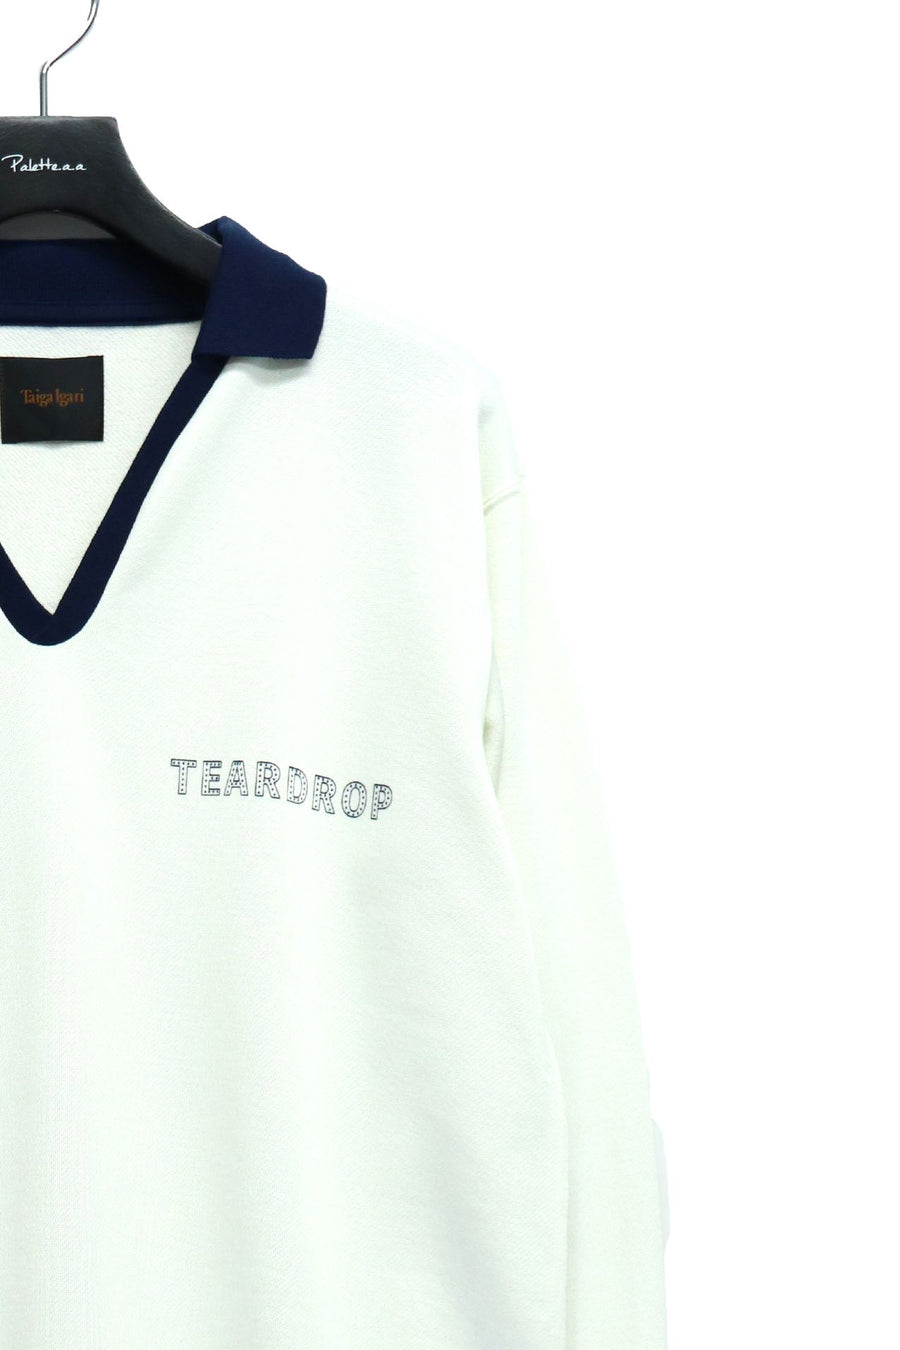 Taiga Igari  Two-Tone Racing Shirt(OFF WHITE  NAVY)